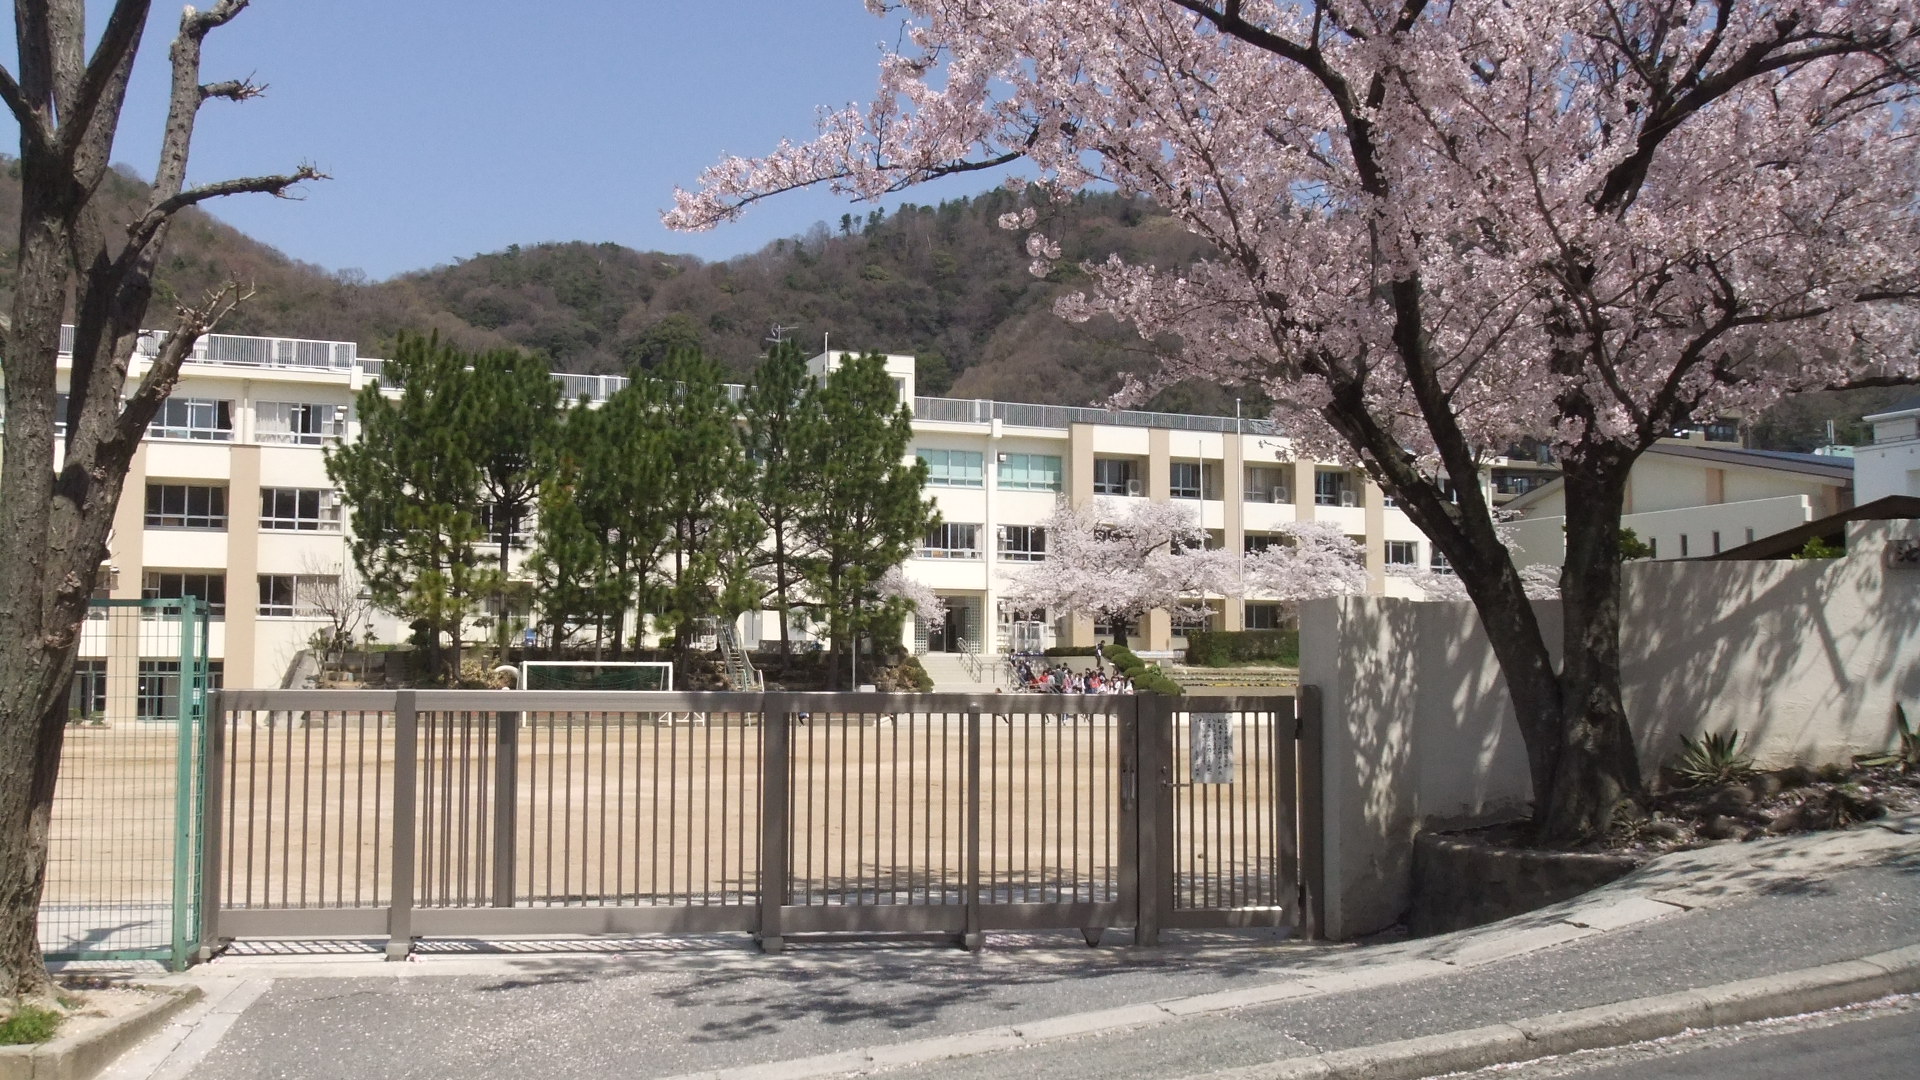 Primary school. Ikeda Municipal Satsukigaoka to elementary school (elementary school) 380m